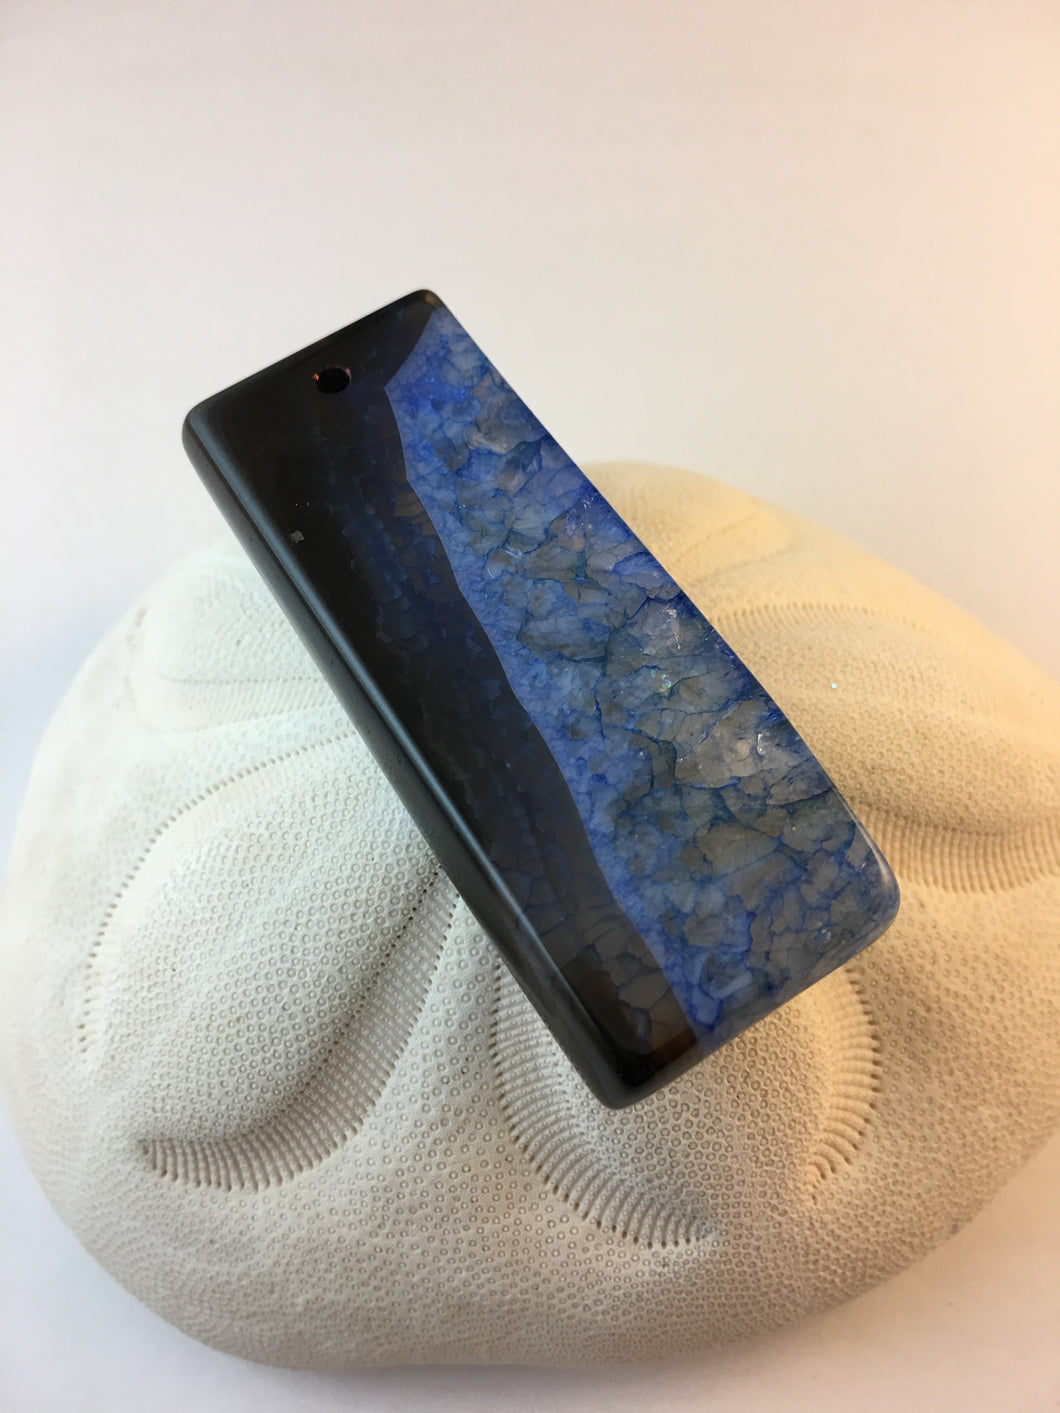 ADA - Beautiful Black & Blue Rectangle Druzy Geode Agate Pendant